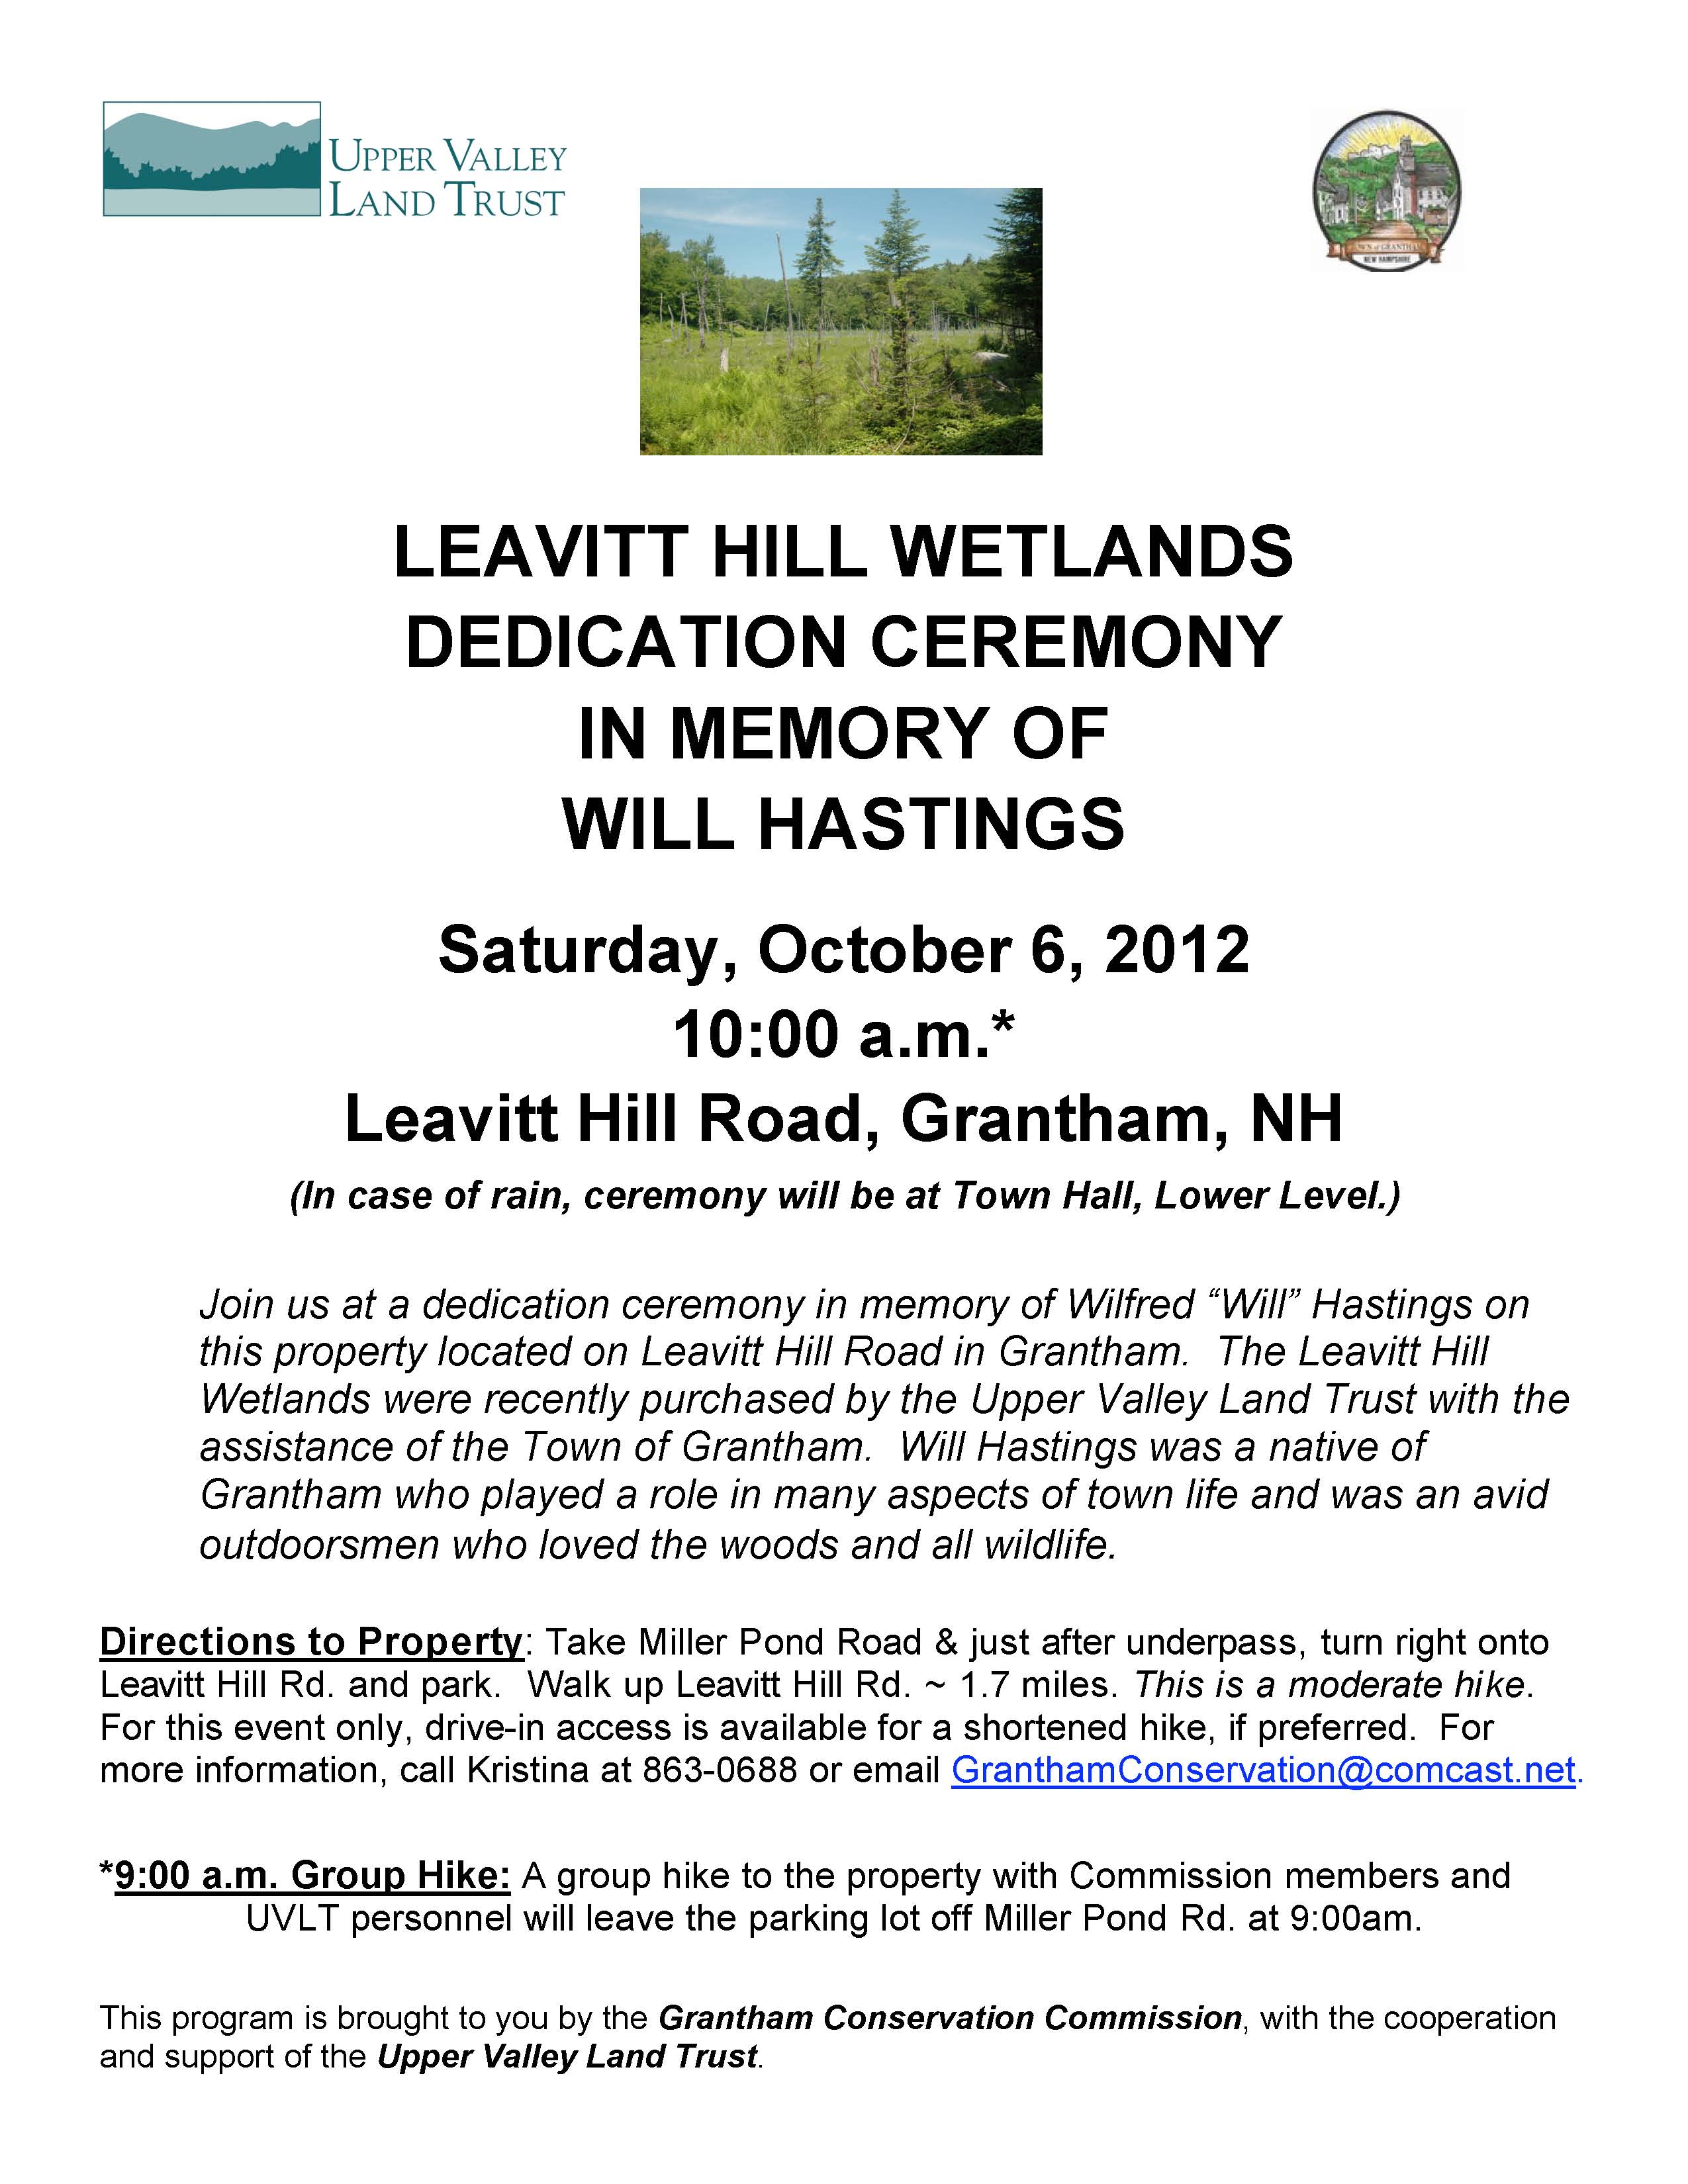 Leavitt Hill Wetland Dedication Ceremony